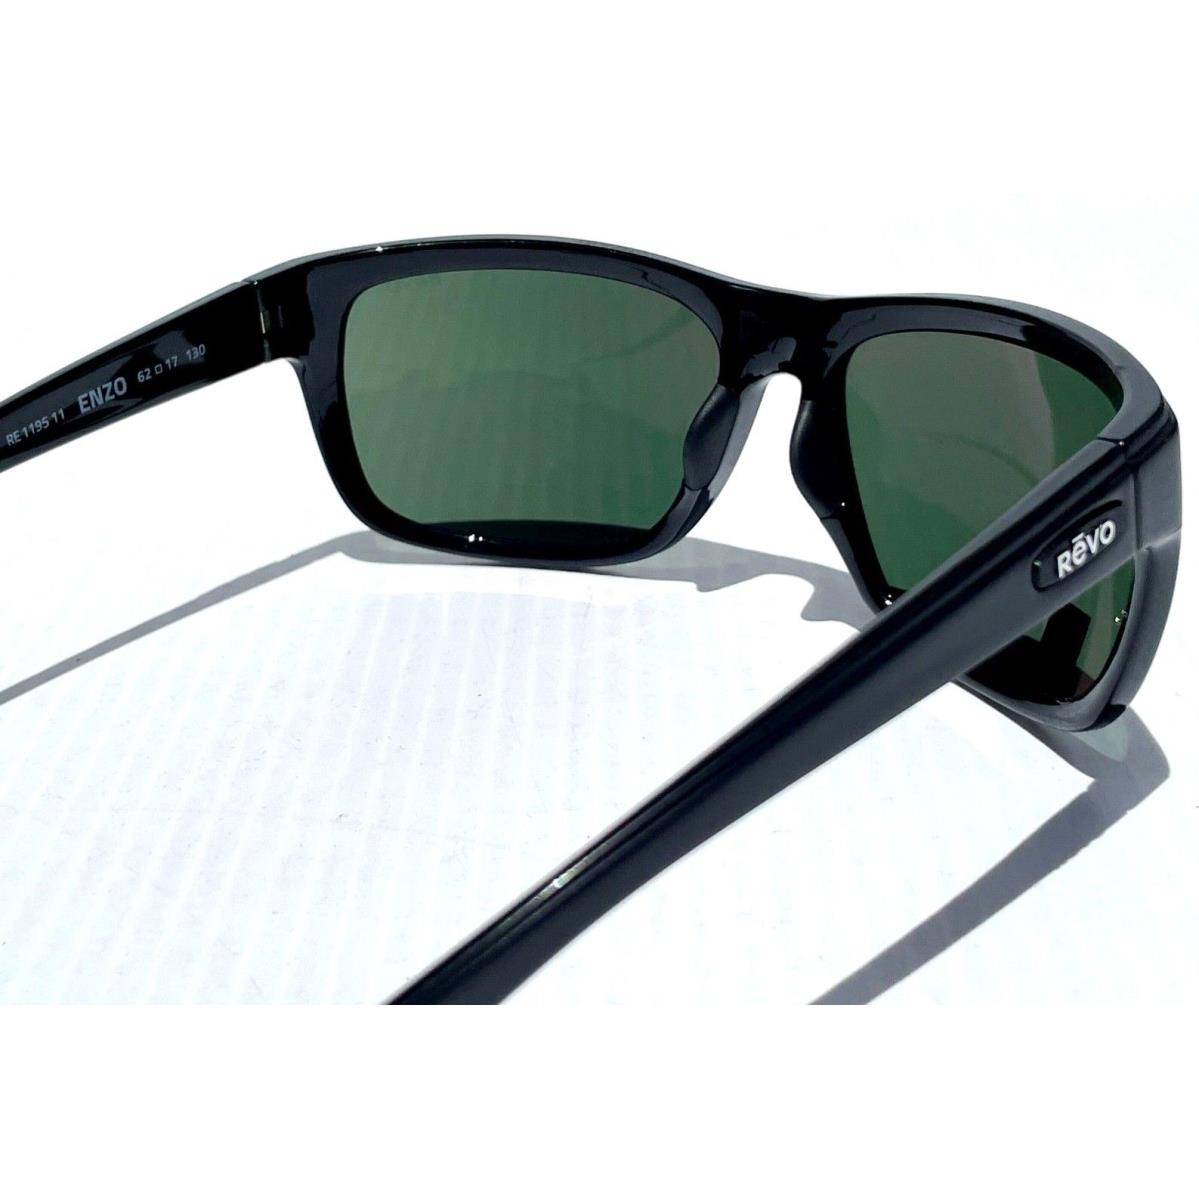 Revo sunglasses Enzo - Black Frame, Silver Green Lens